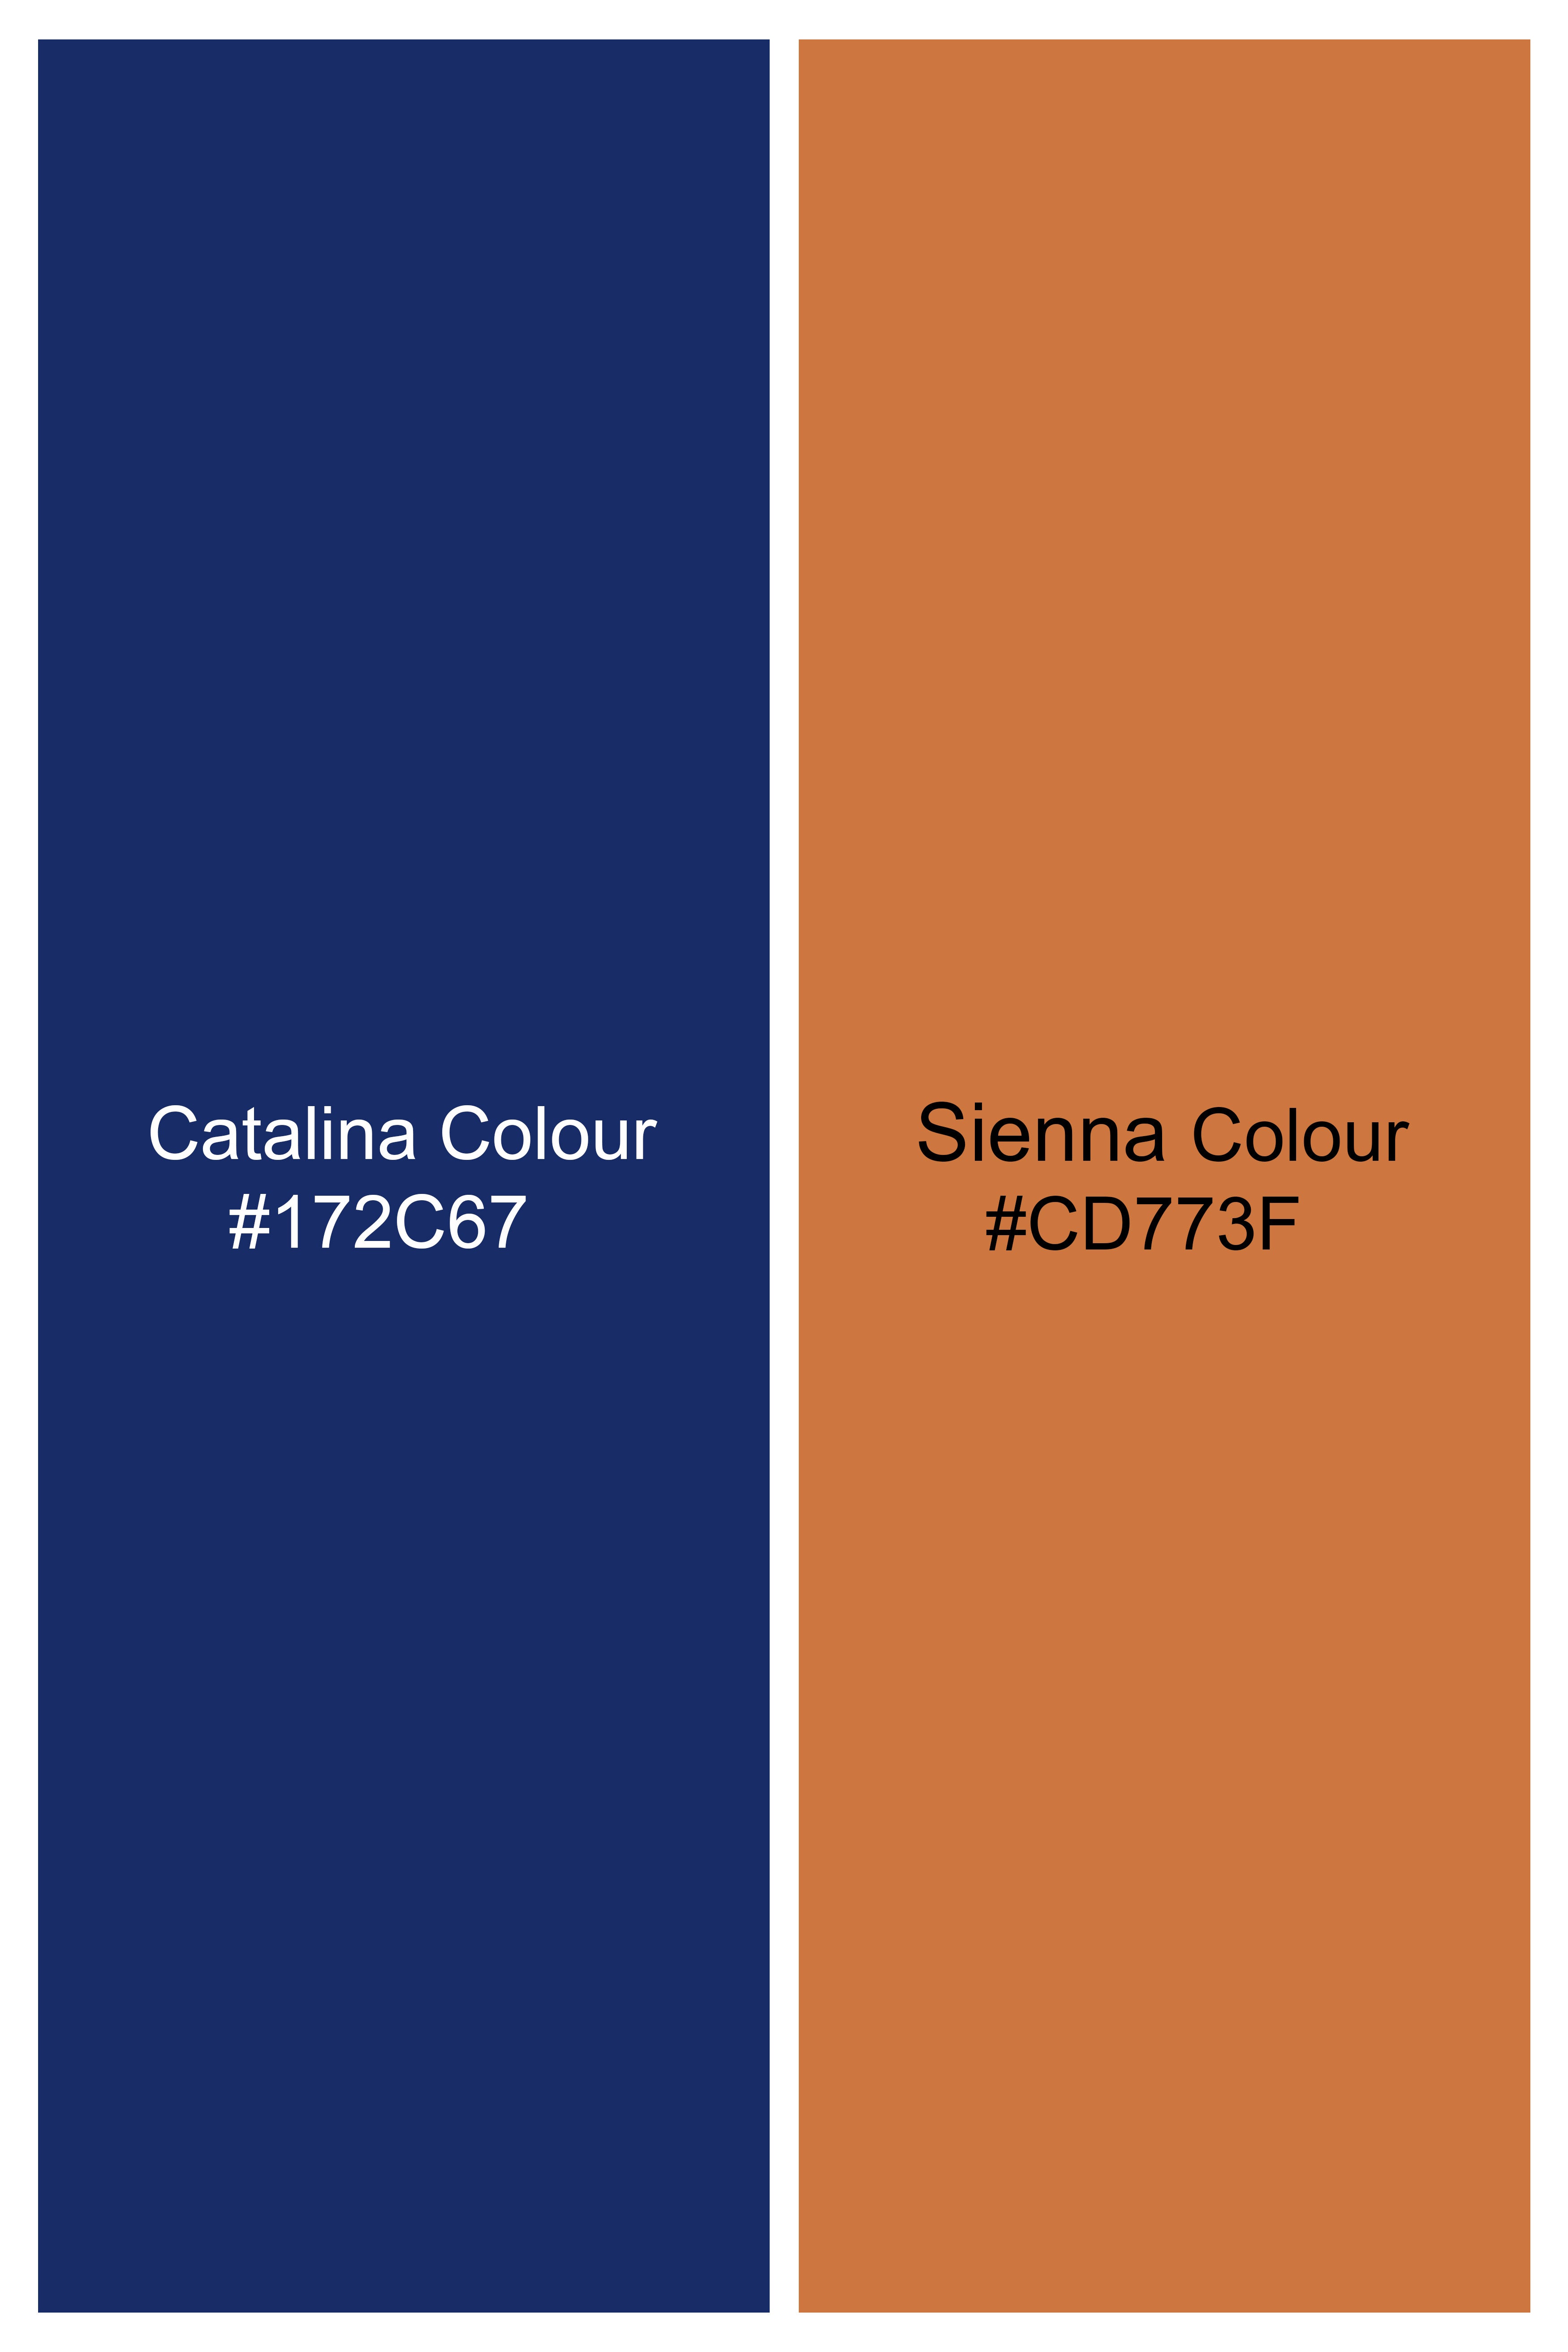 Catalina Blue and Sienna Orange Wool Rich Designer Blazer BL2943-SB-D46-36, BL2943-SB-D46-38, BL2943-SB-D46-40, BL2943-SB-D46-42, BL2943-SB-D46-44, BL2943-SB-D46-46, BL2943-SB-D46-48, BL2943-SB-D46-50, BL2943-SB-D46-52, BL2943-SB-D46-54, BL2943-SB-D46-56, BL2943-SB-D46-58, BL2943-SB-D46-60